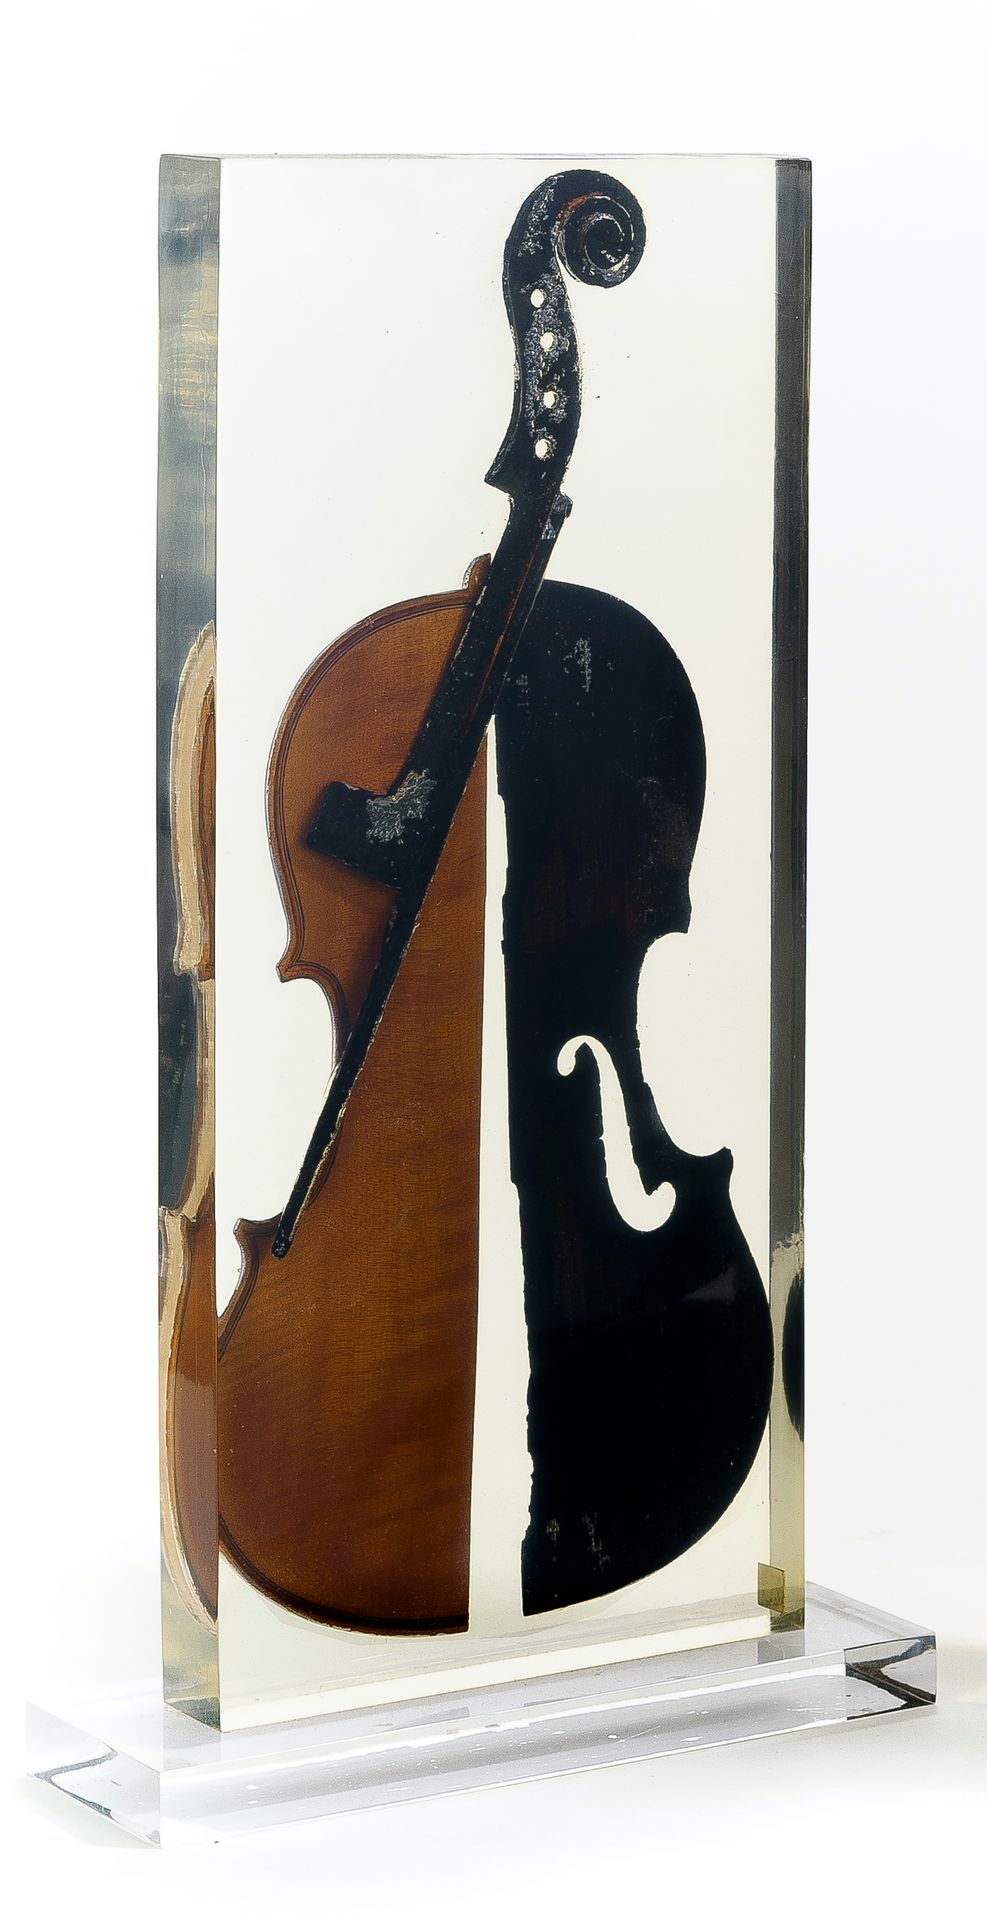 Null 阿尔曼(1928-2005)

火之舞, 1997

聚酯树脂中包含的烧焦的木质小提琴

刻在卡特尔上的签名

编号为65/100

50 x 30 &hellip;